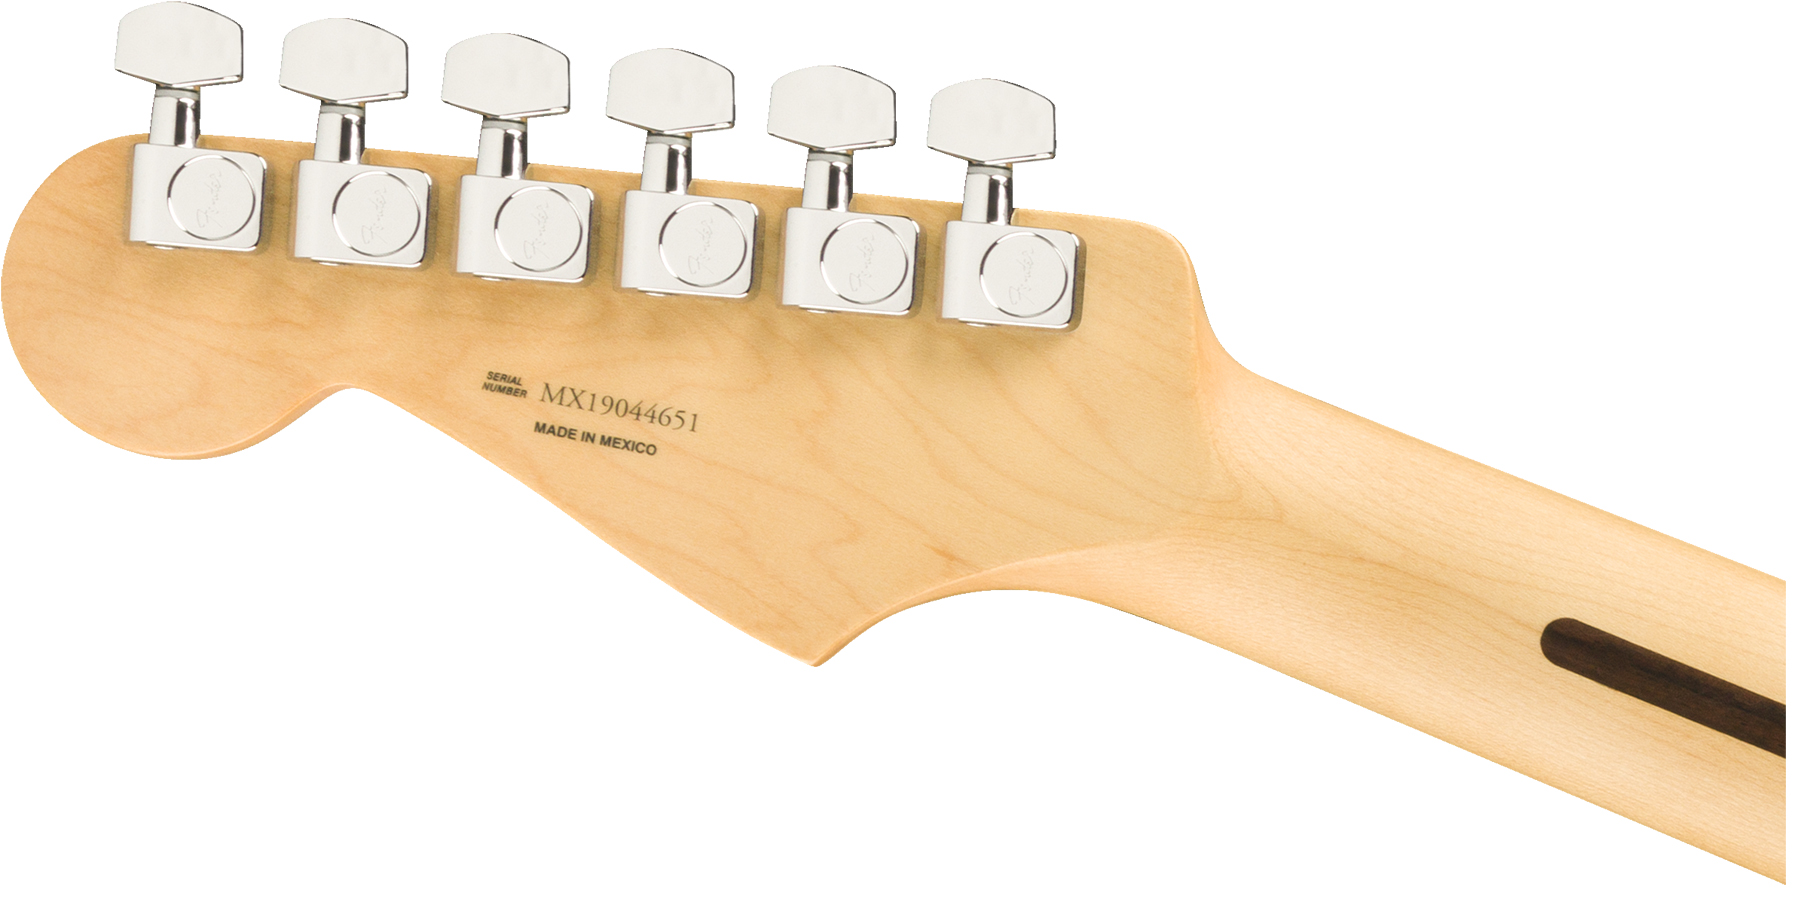 Fender Strat Player Mex Hsh Pf - Silver - Guitarra eléctrica con forma de str. - Variation 2